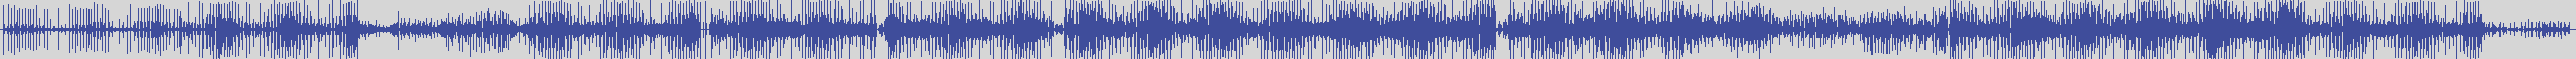 atomic_recordings [AR009] Strump Dump - Old Skool Beat [Tobi Neumann Vocal] audio wave form